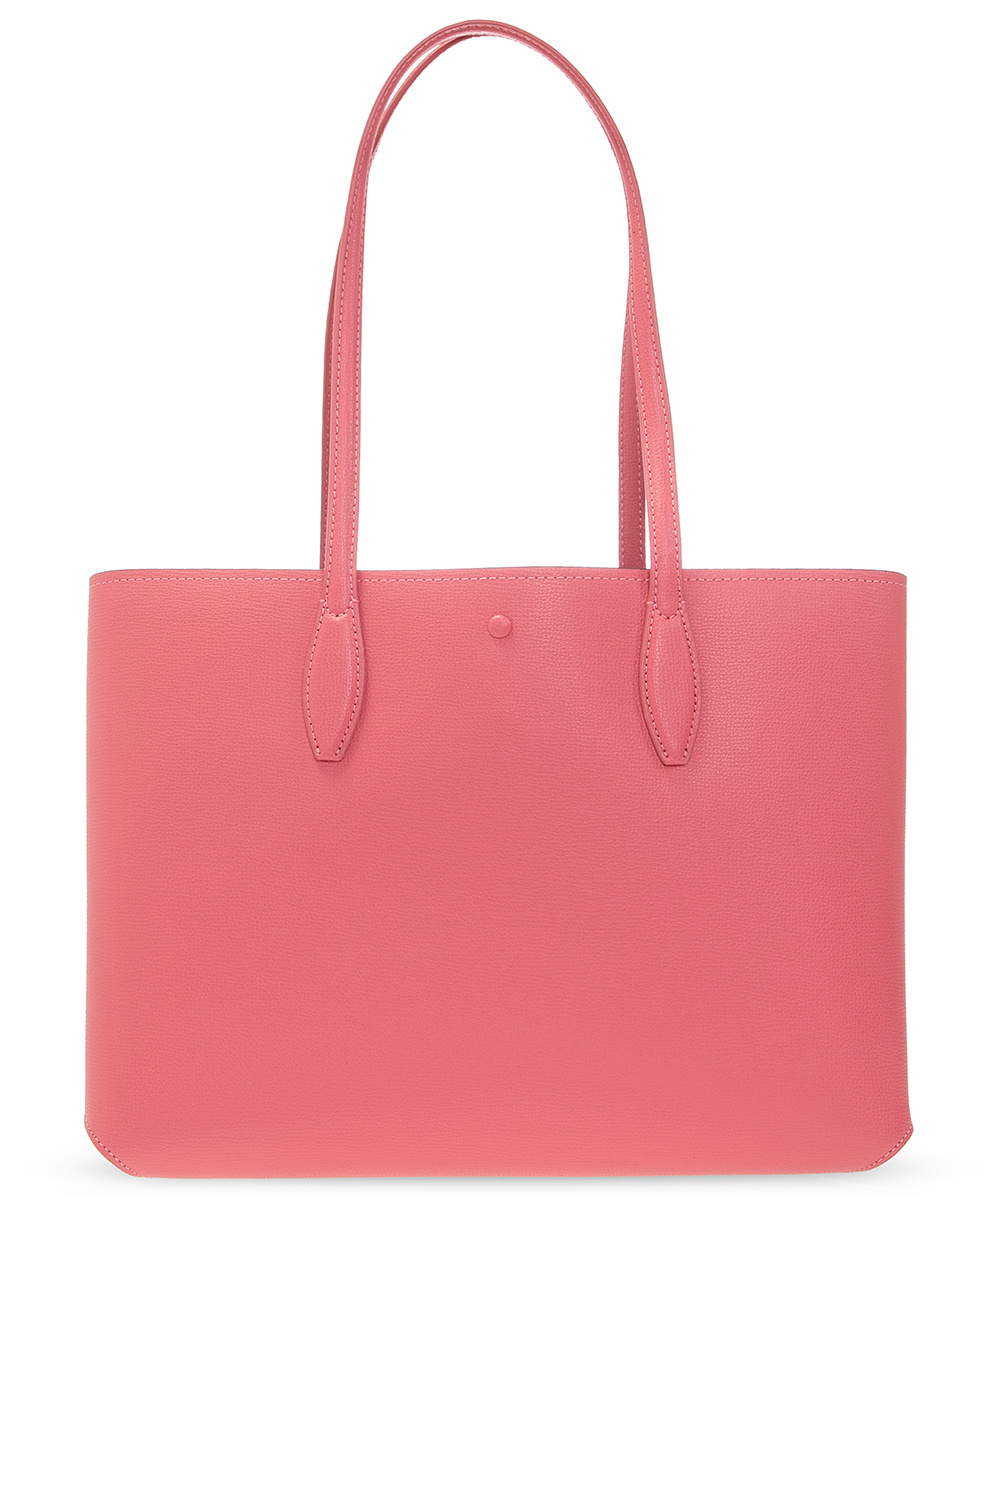 Kate Spade ‘All Day Large’ shopper bag